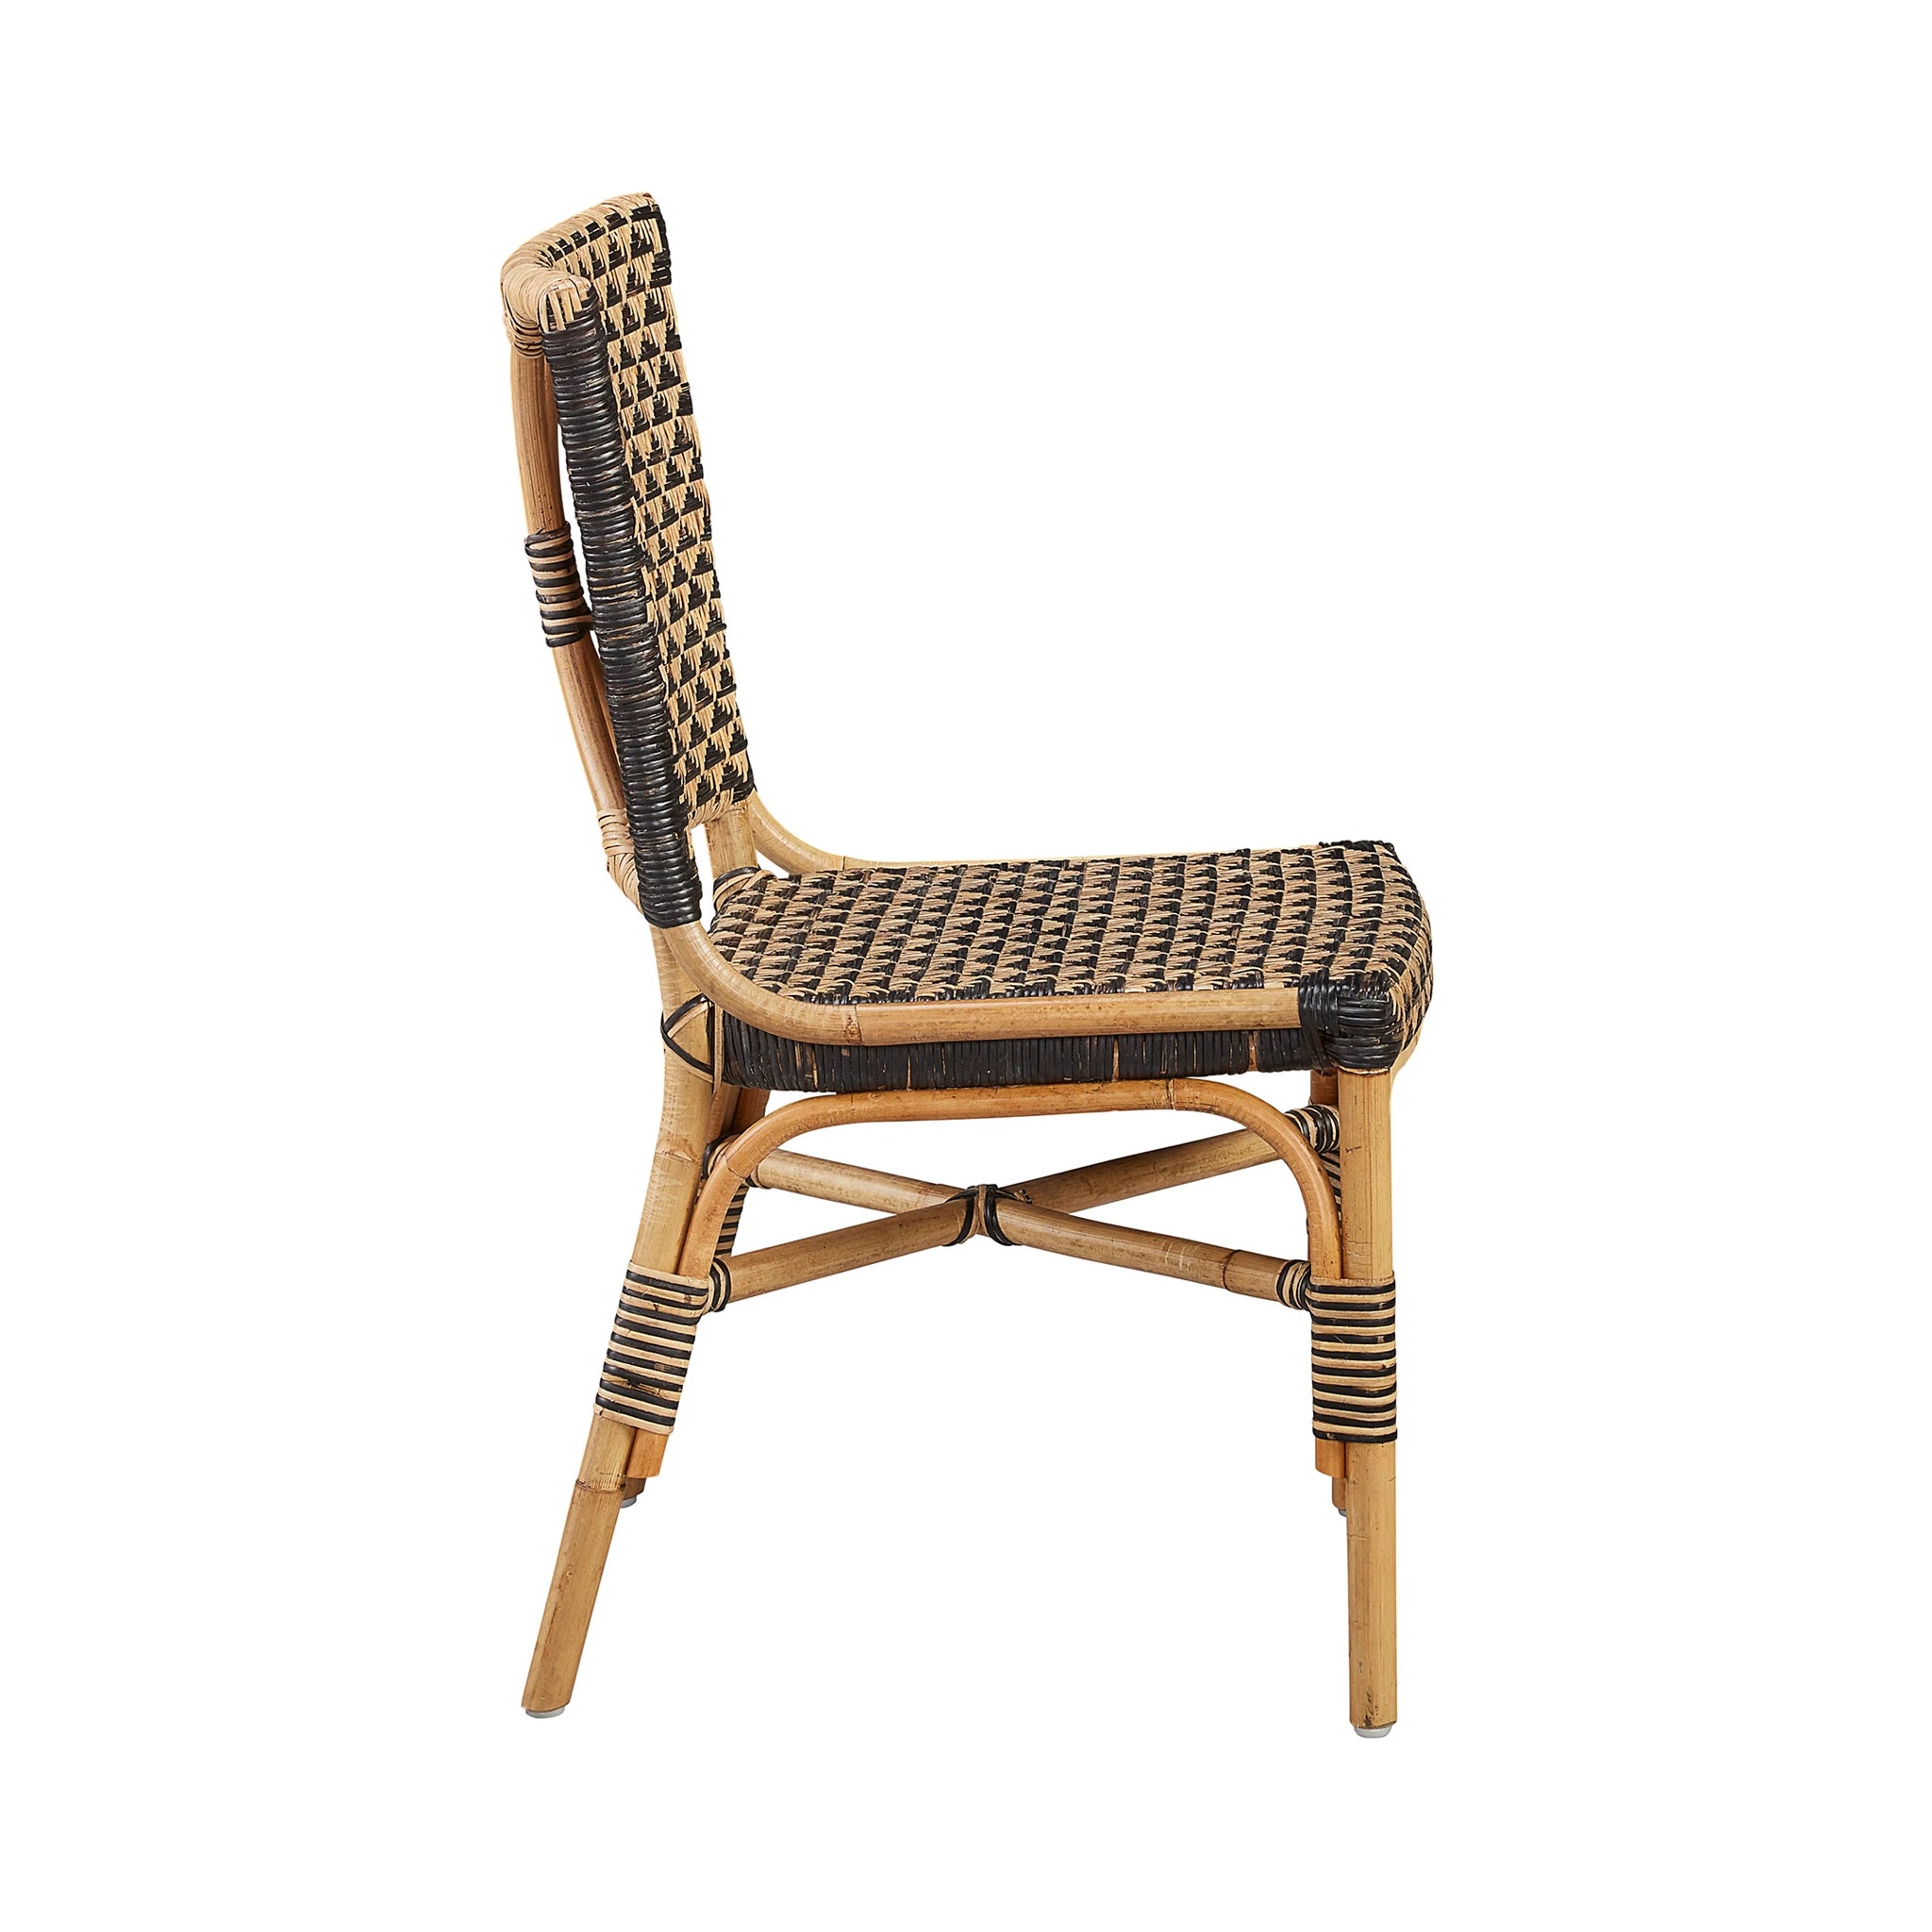 Geometric Black and Tan Rattan Dining Chair - Set of 2